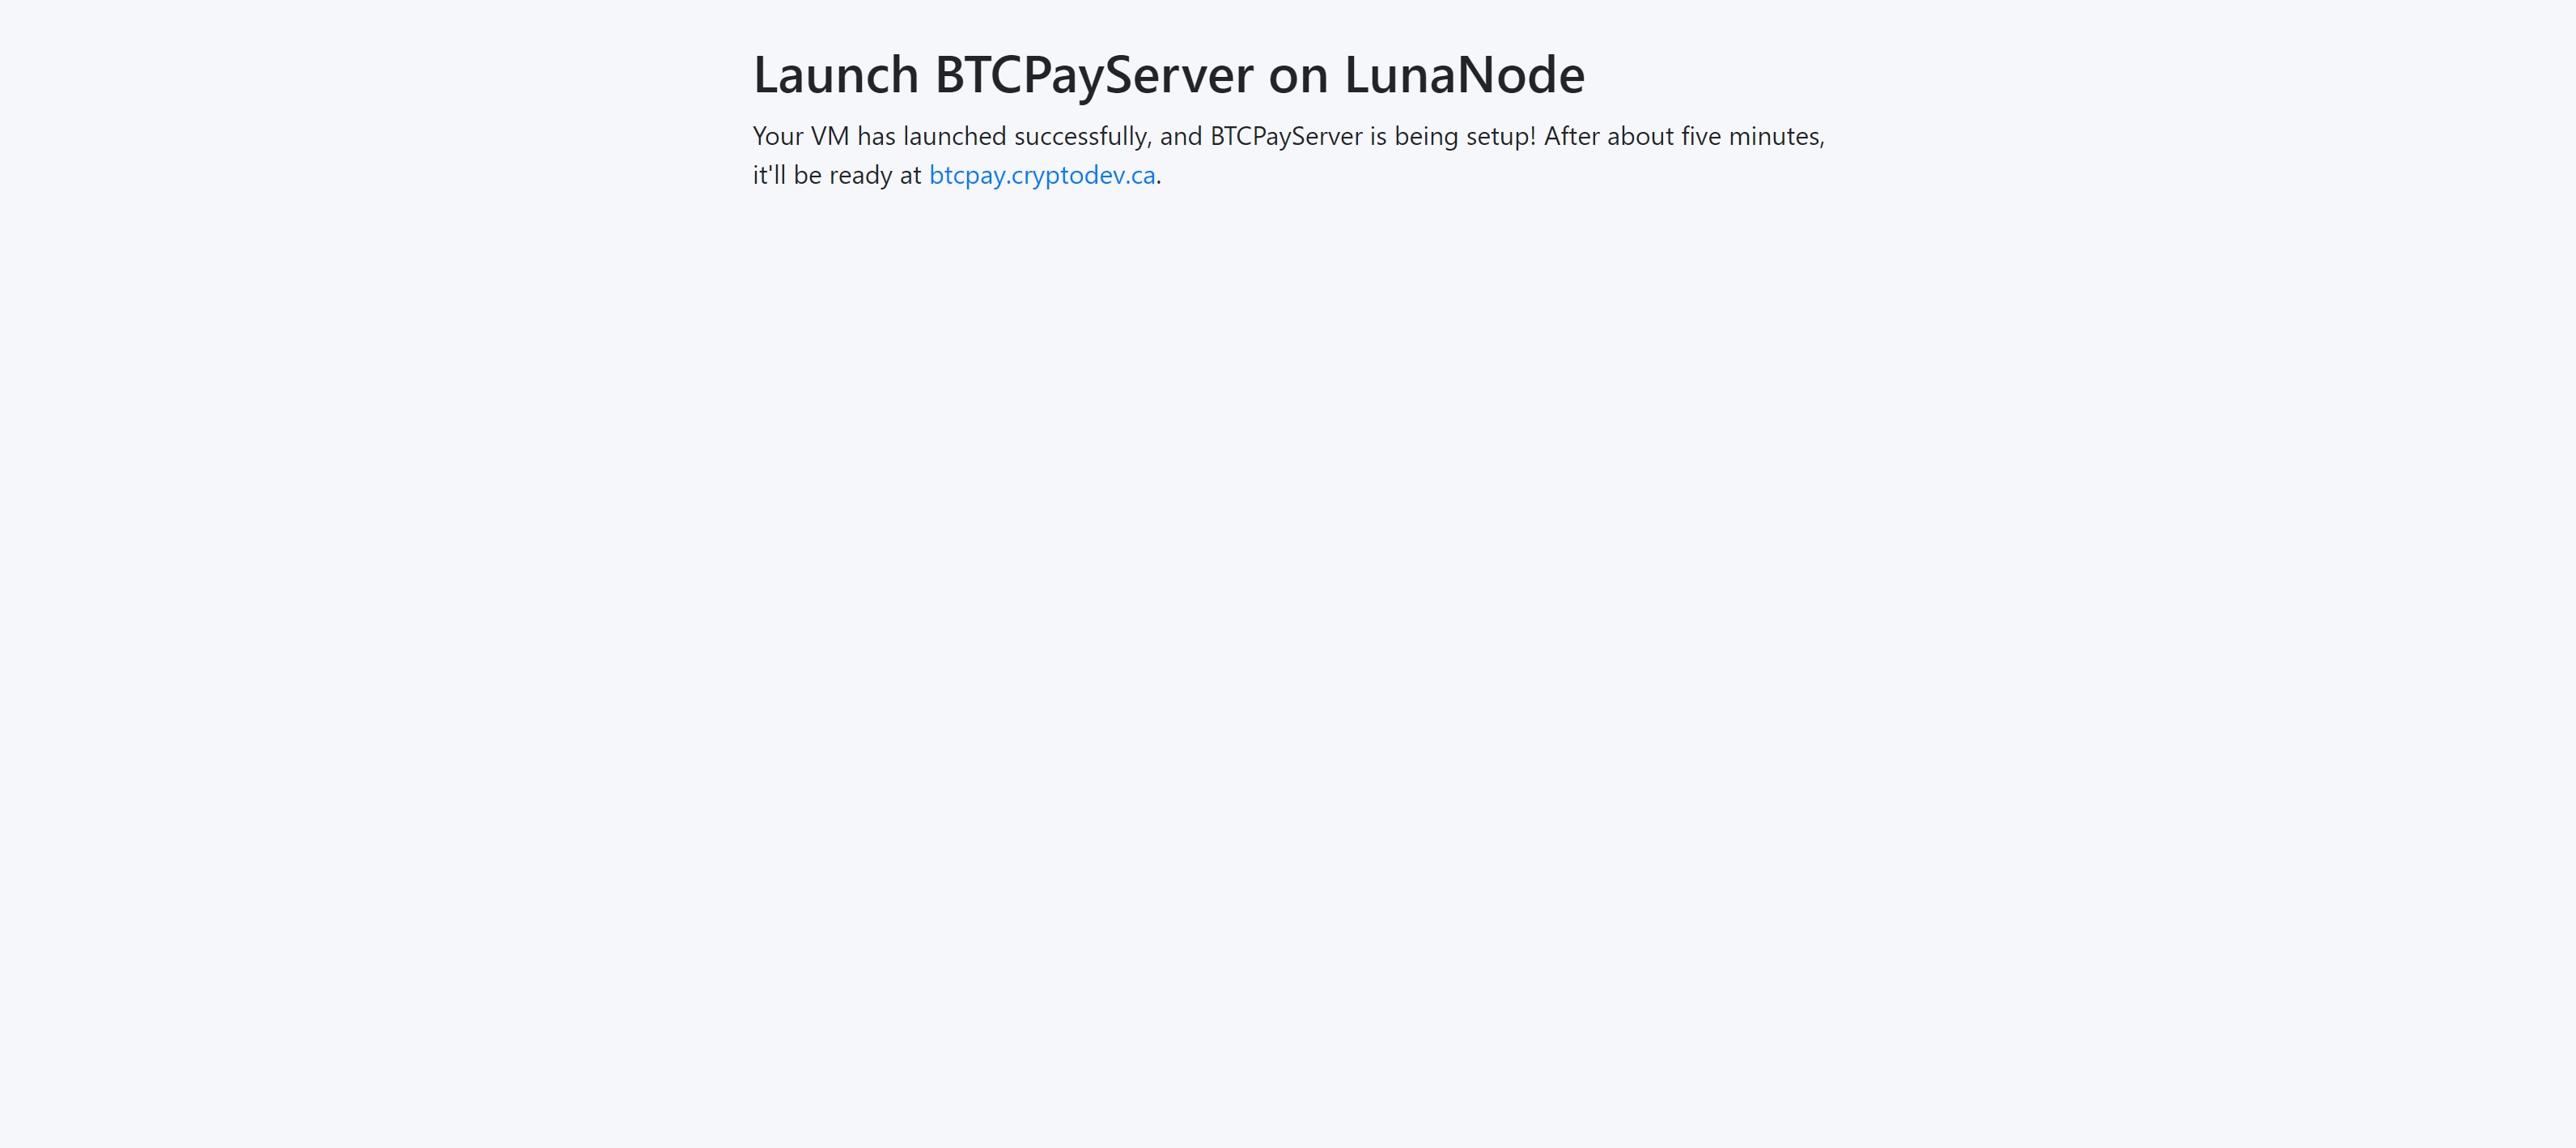 Launch VM Confirmed BTCPayServer on LunaNode